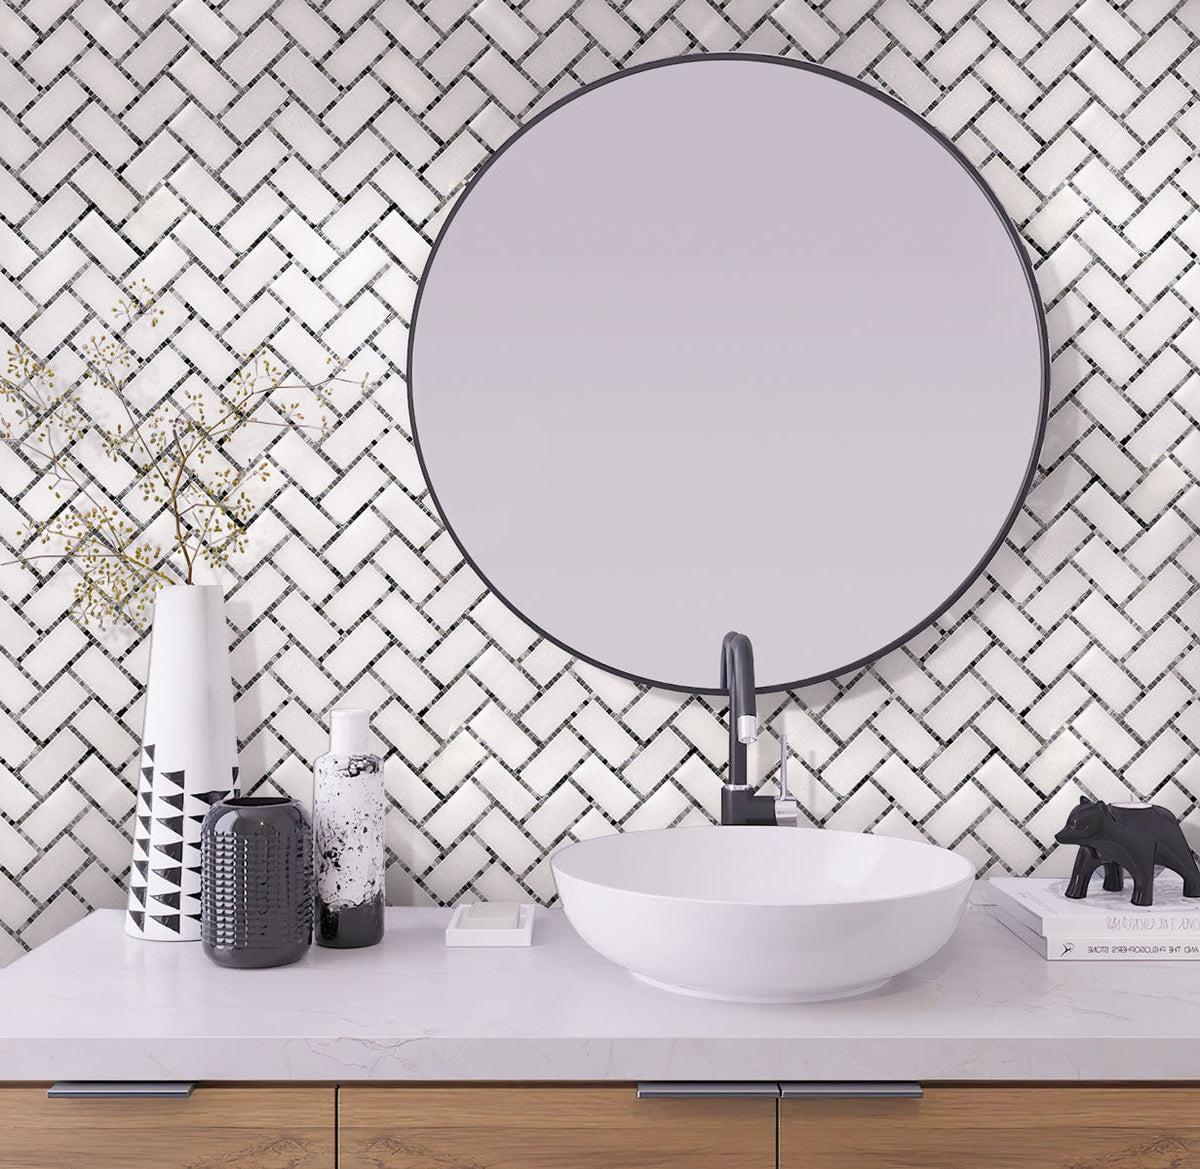 Lexington Gray Marble Mosaic Tile bathroom backsplash